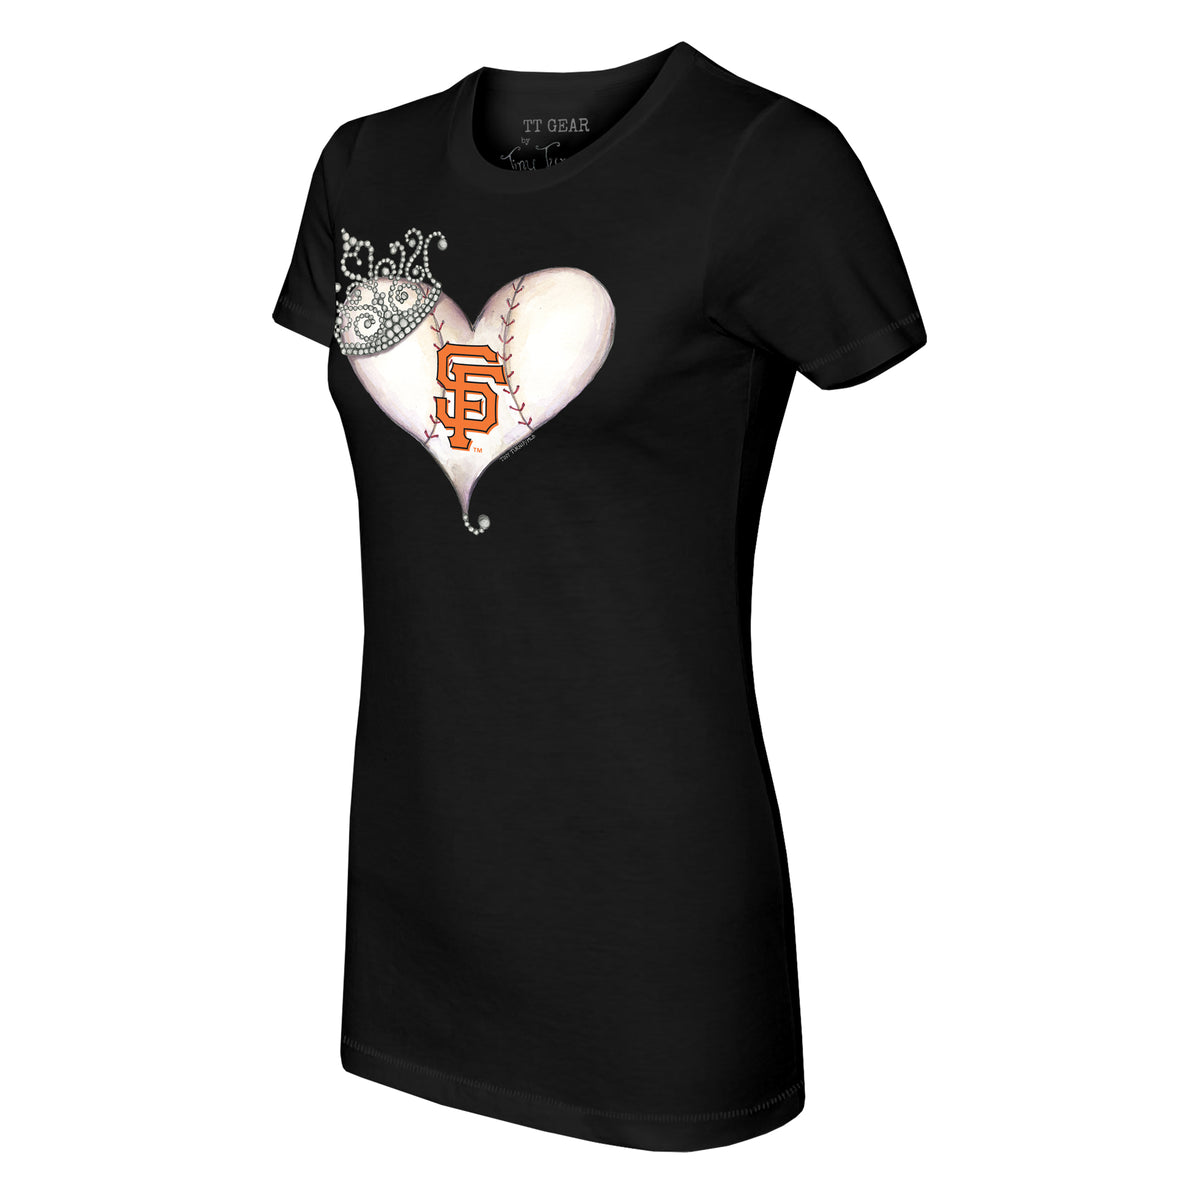 San Francisco Giants Tiara Heart Tee Shirt